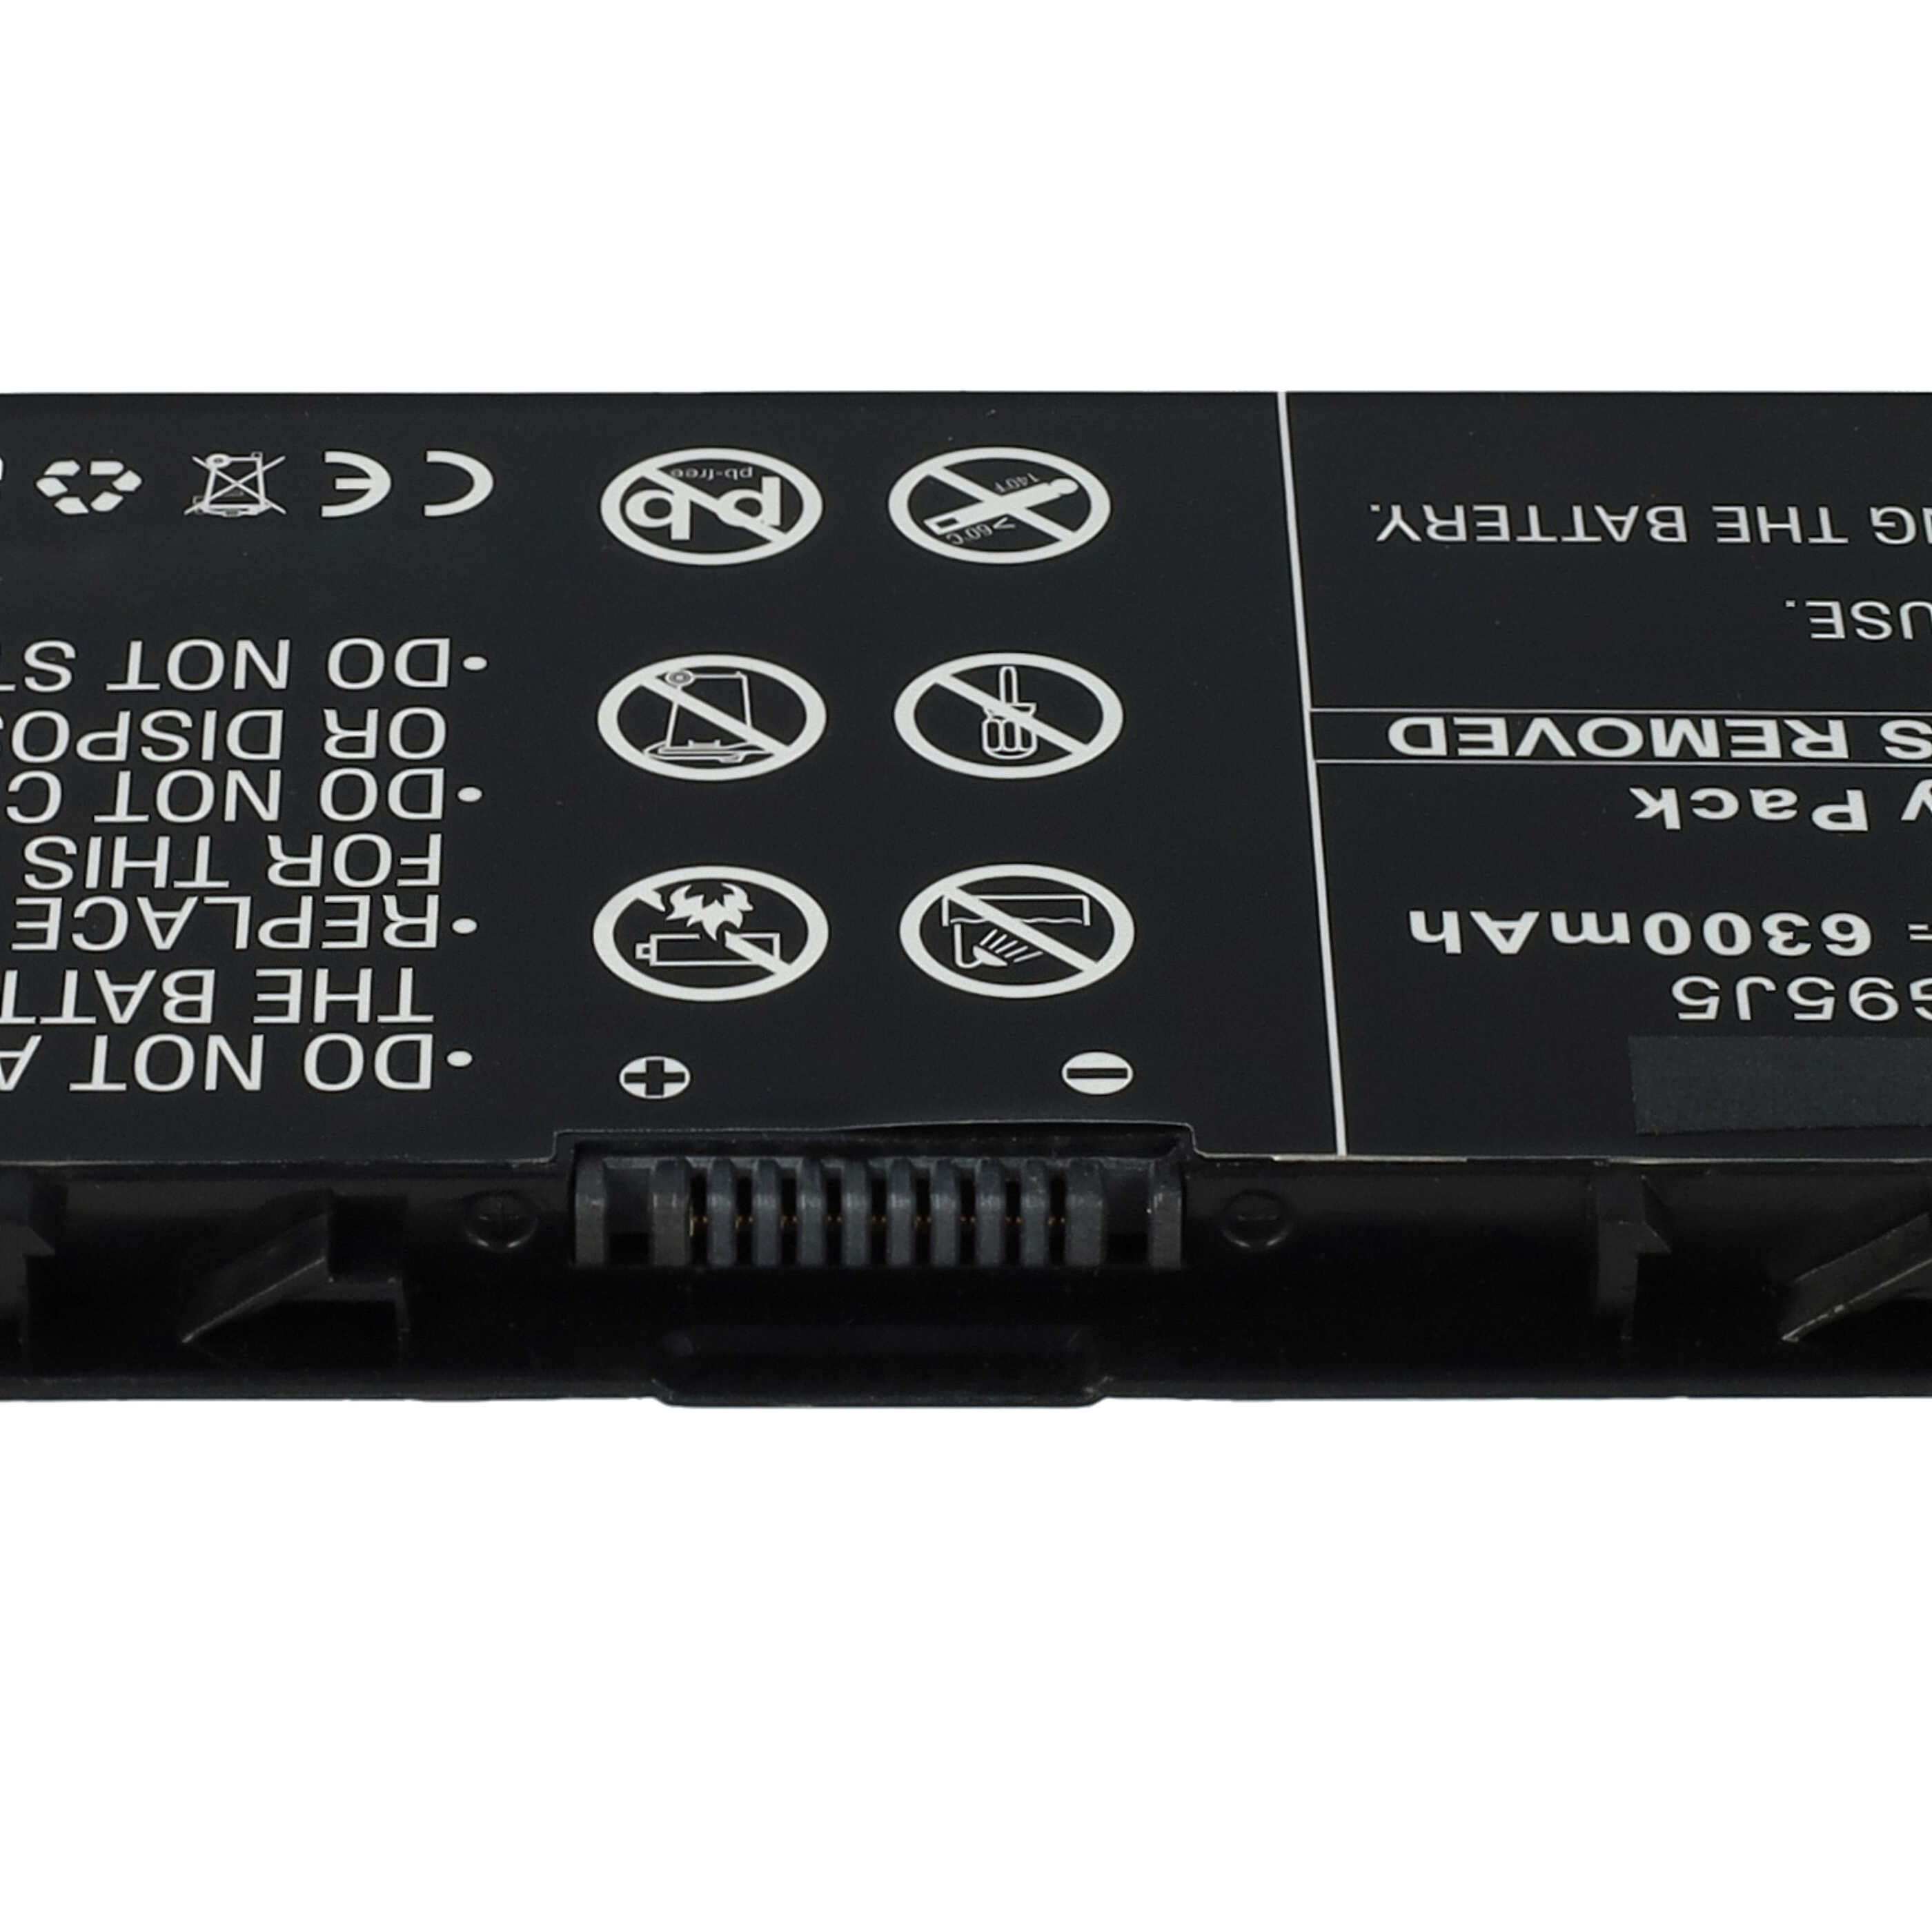 Batteria sostituisce Dell 3RNFD, FLP22C01, G95J5, V8XN3 per notebook Dell - 6300mAh 7,4V Li-Ion